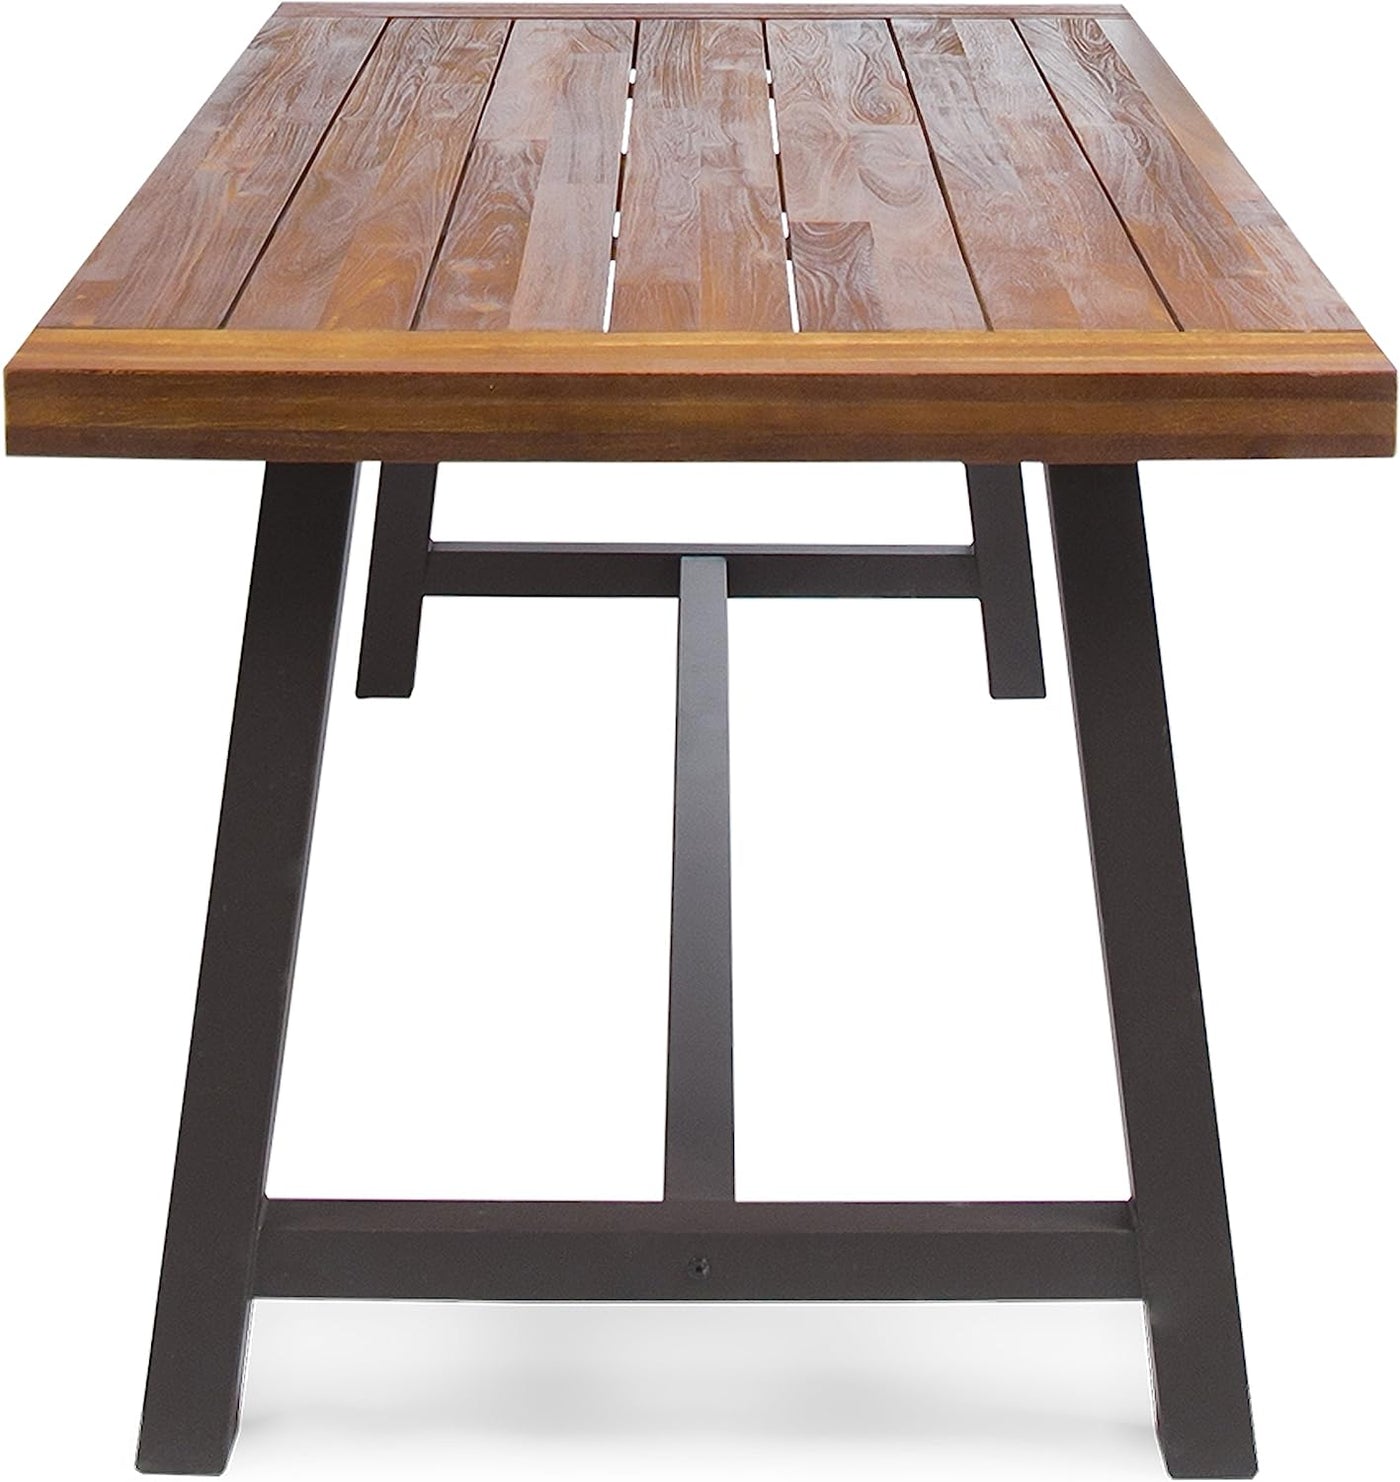 Carlisle Outdoor Dining Table with Iron Legs, Sandblast Finish / Rustic Metal - $145